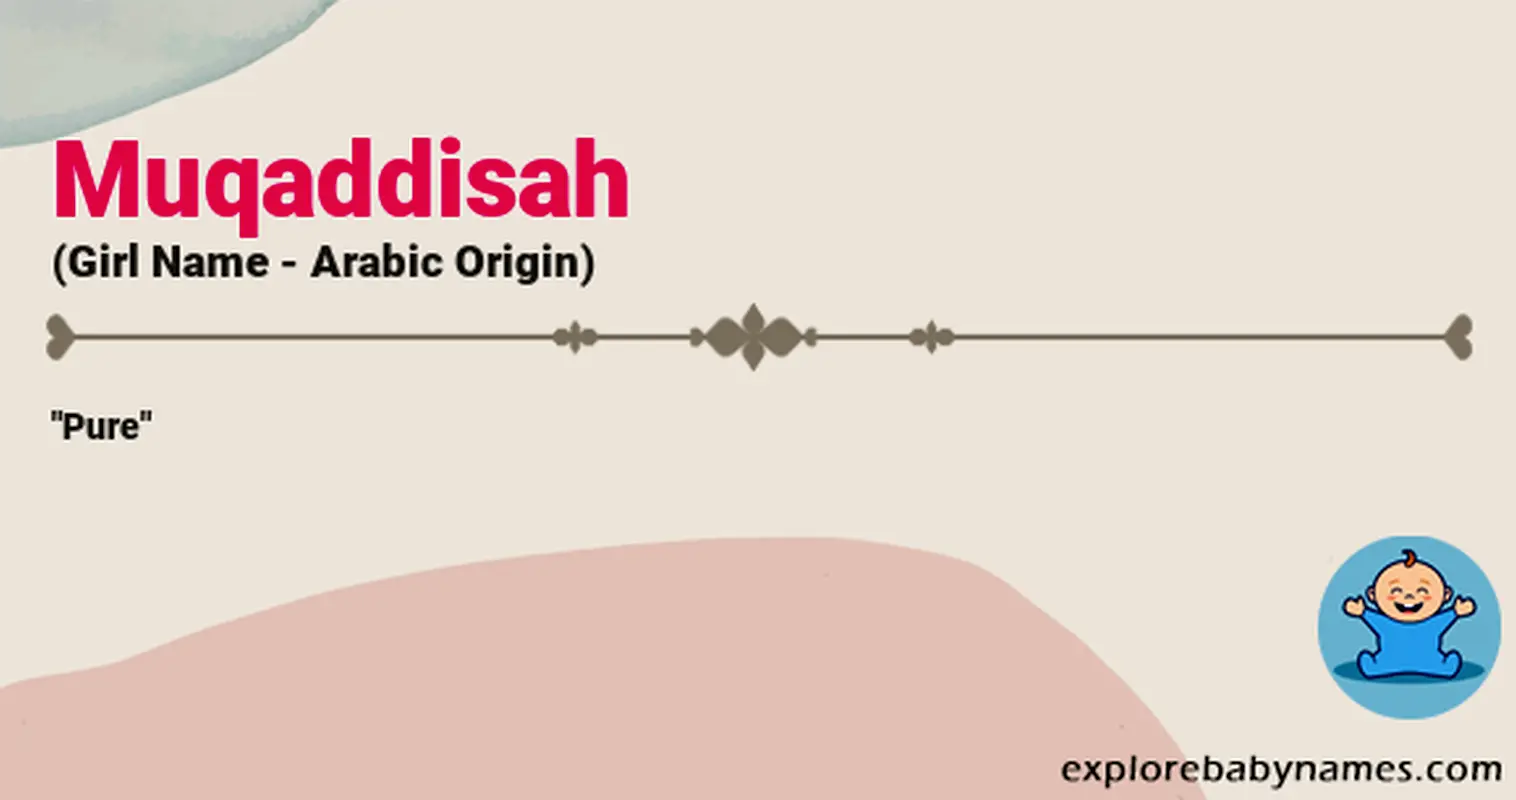 Meaning of Muqaddisah